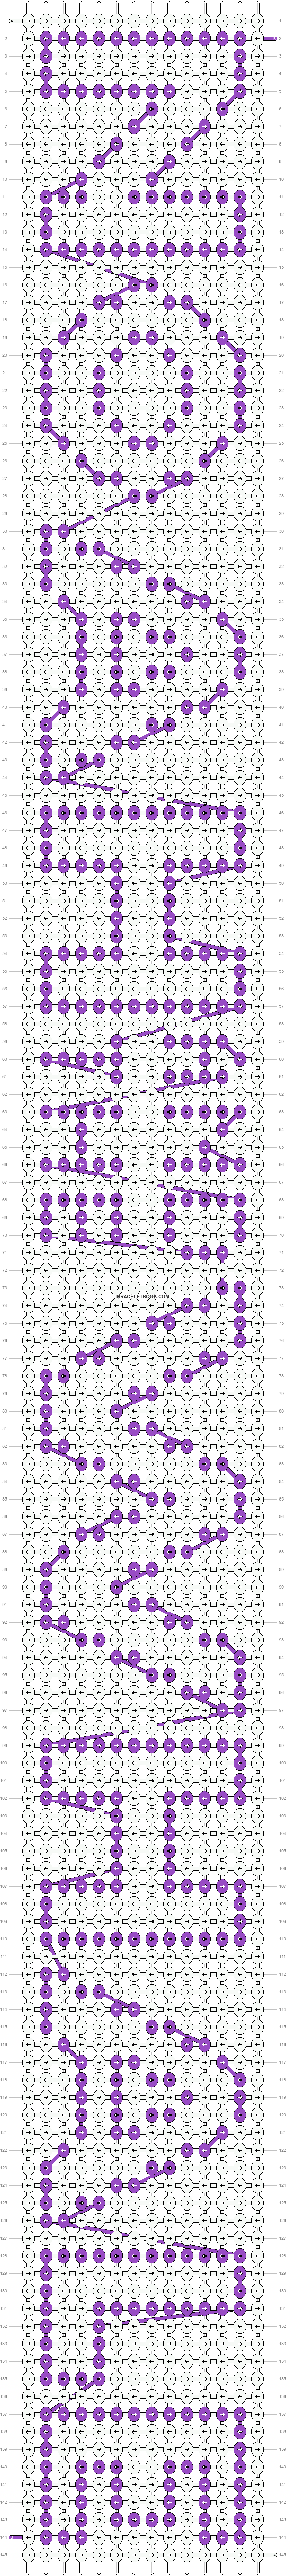 Alpha pattern #18264 pattern